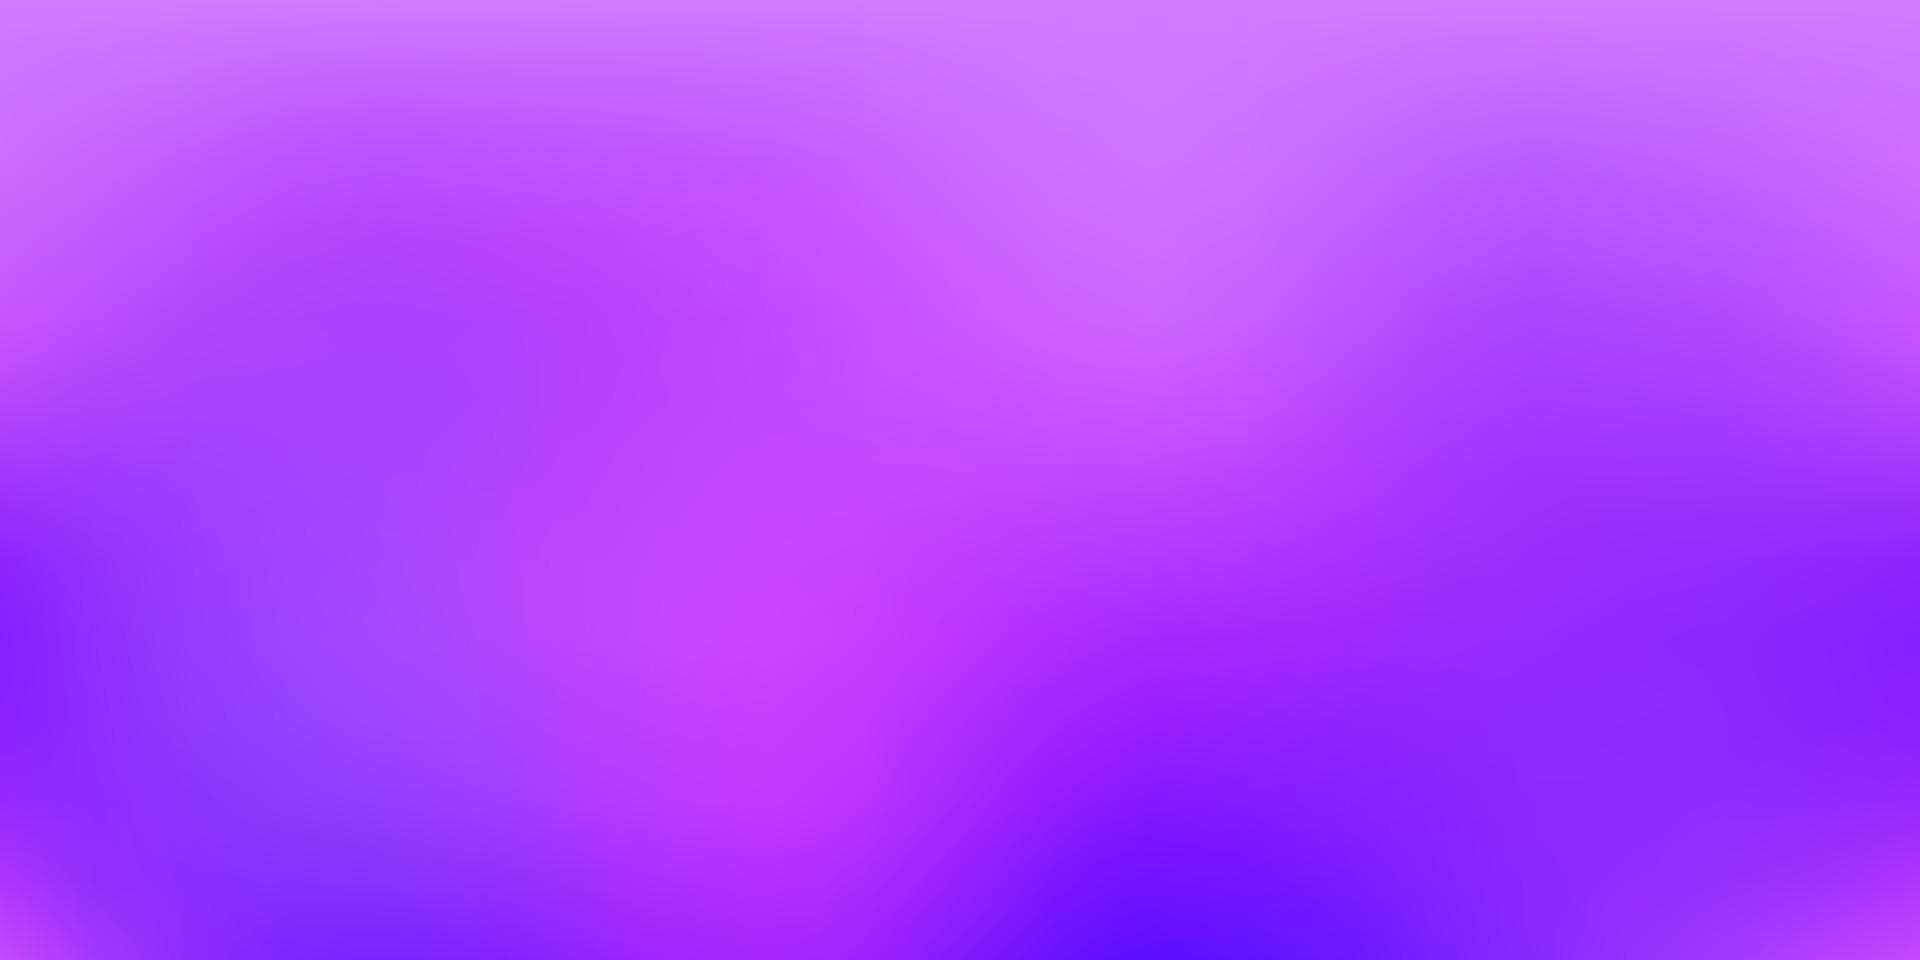 Light Purple vector abstract blur template.